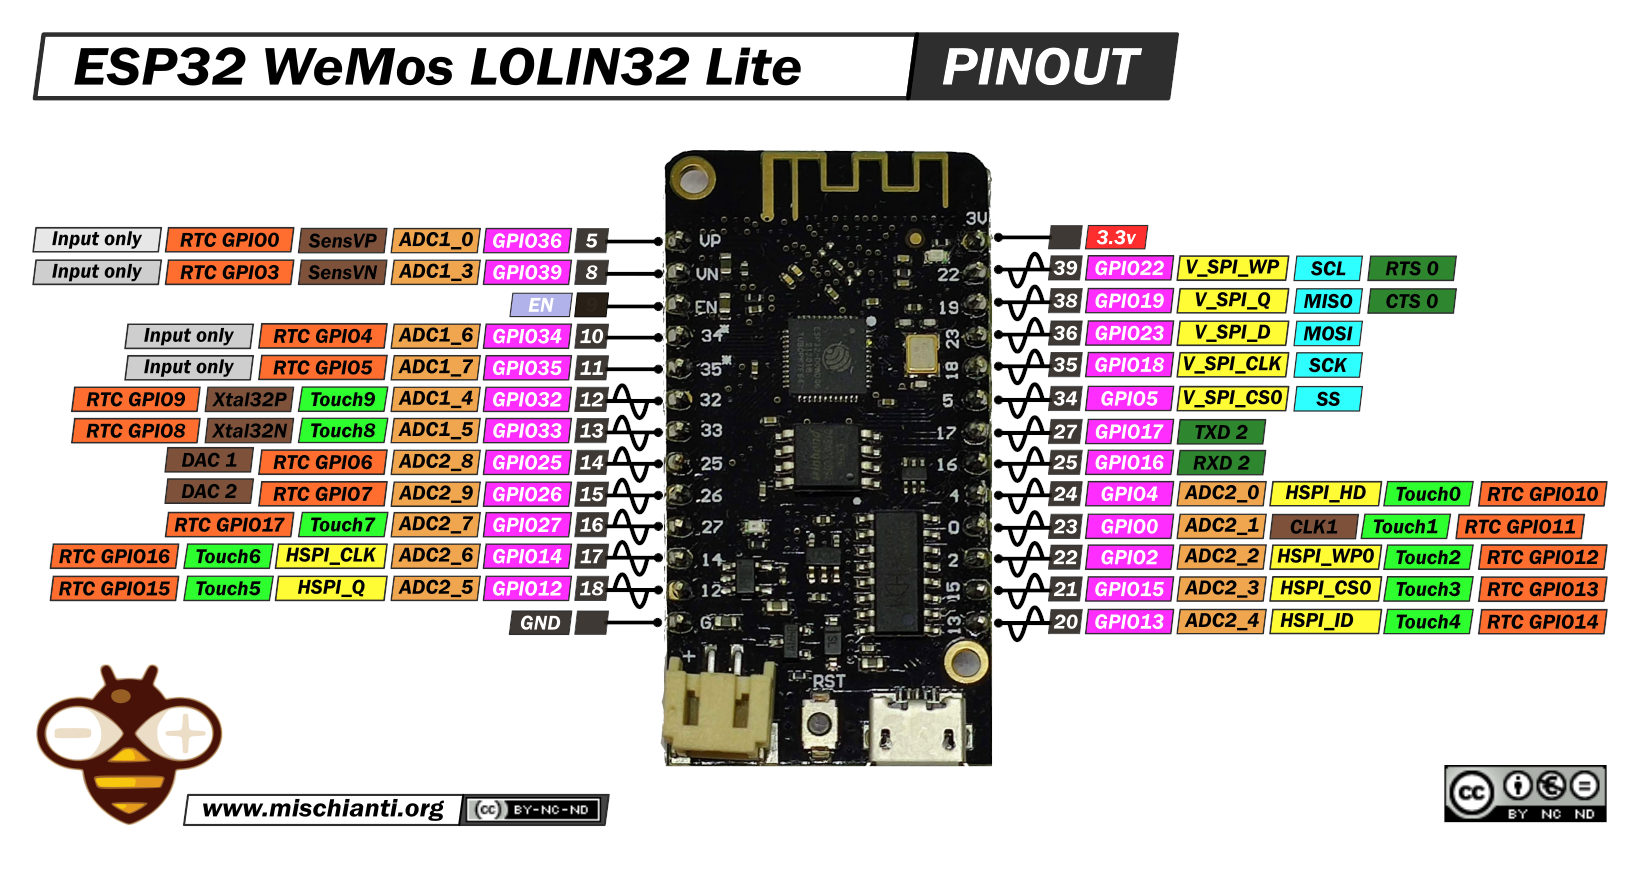 ESP32 WeMos LOLIN32 Lite high resolution pinout and specs – Renzo ...